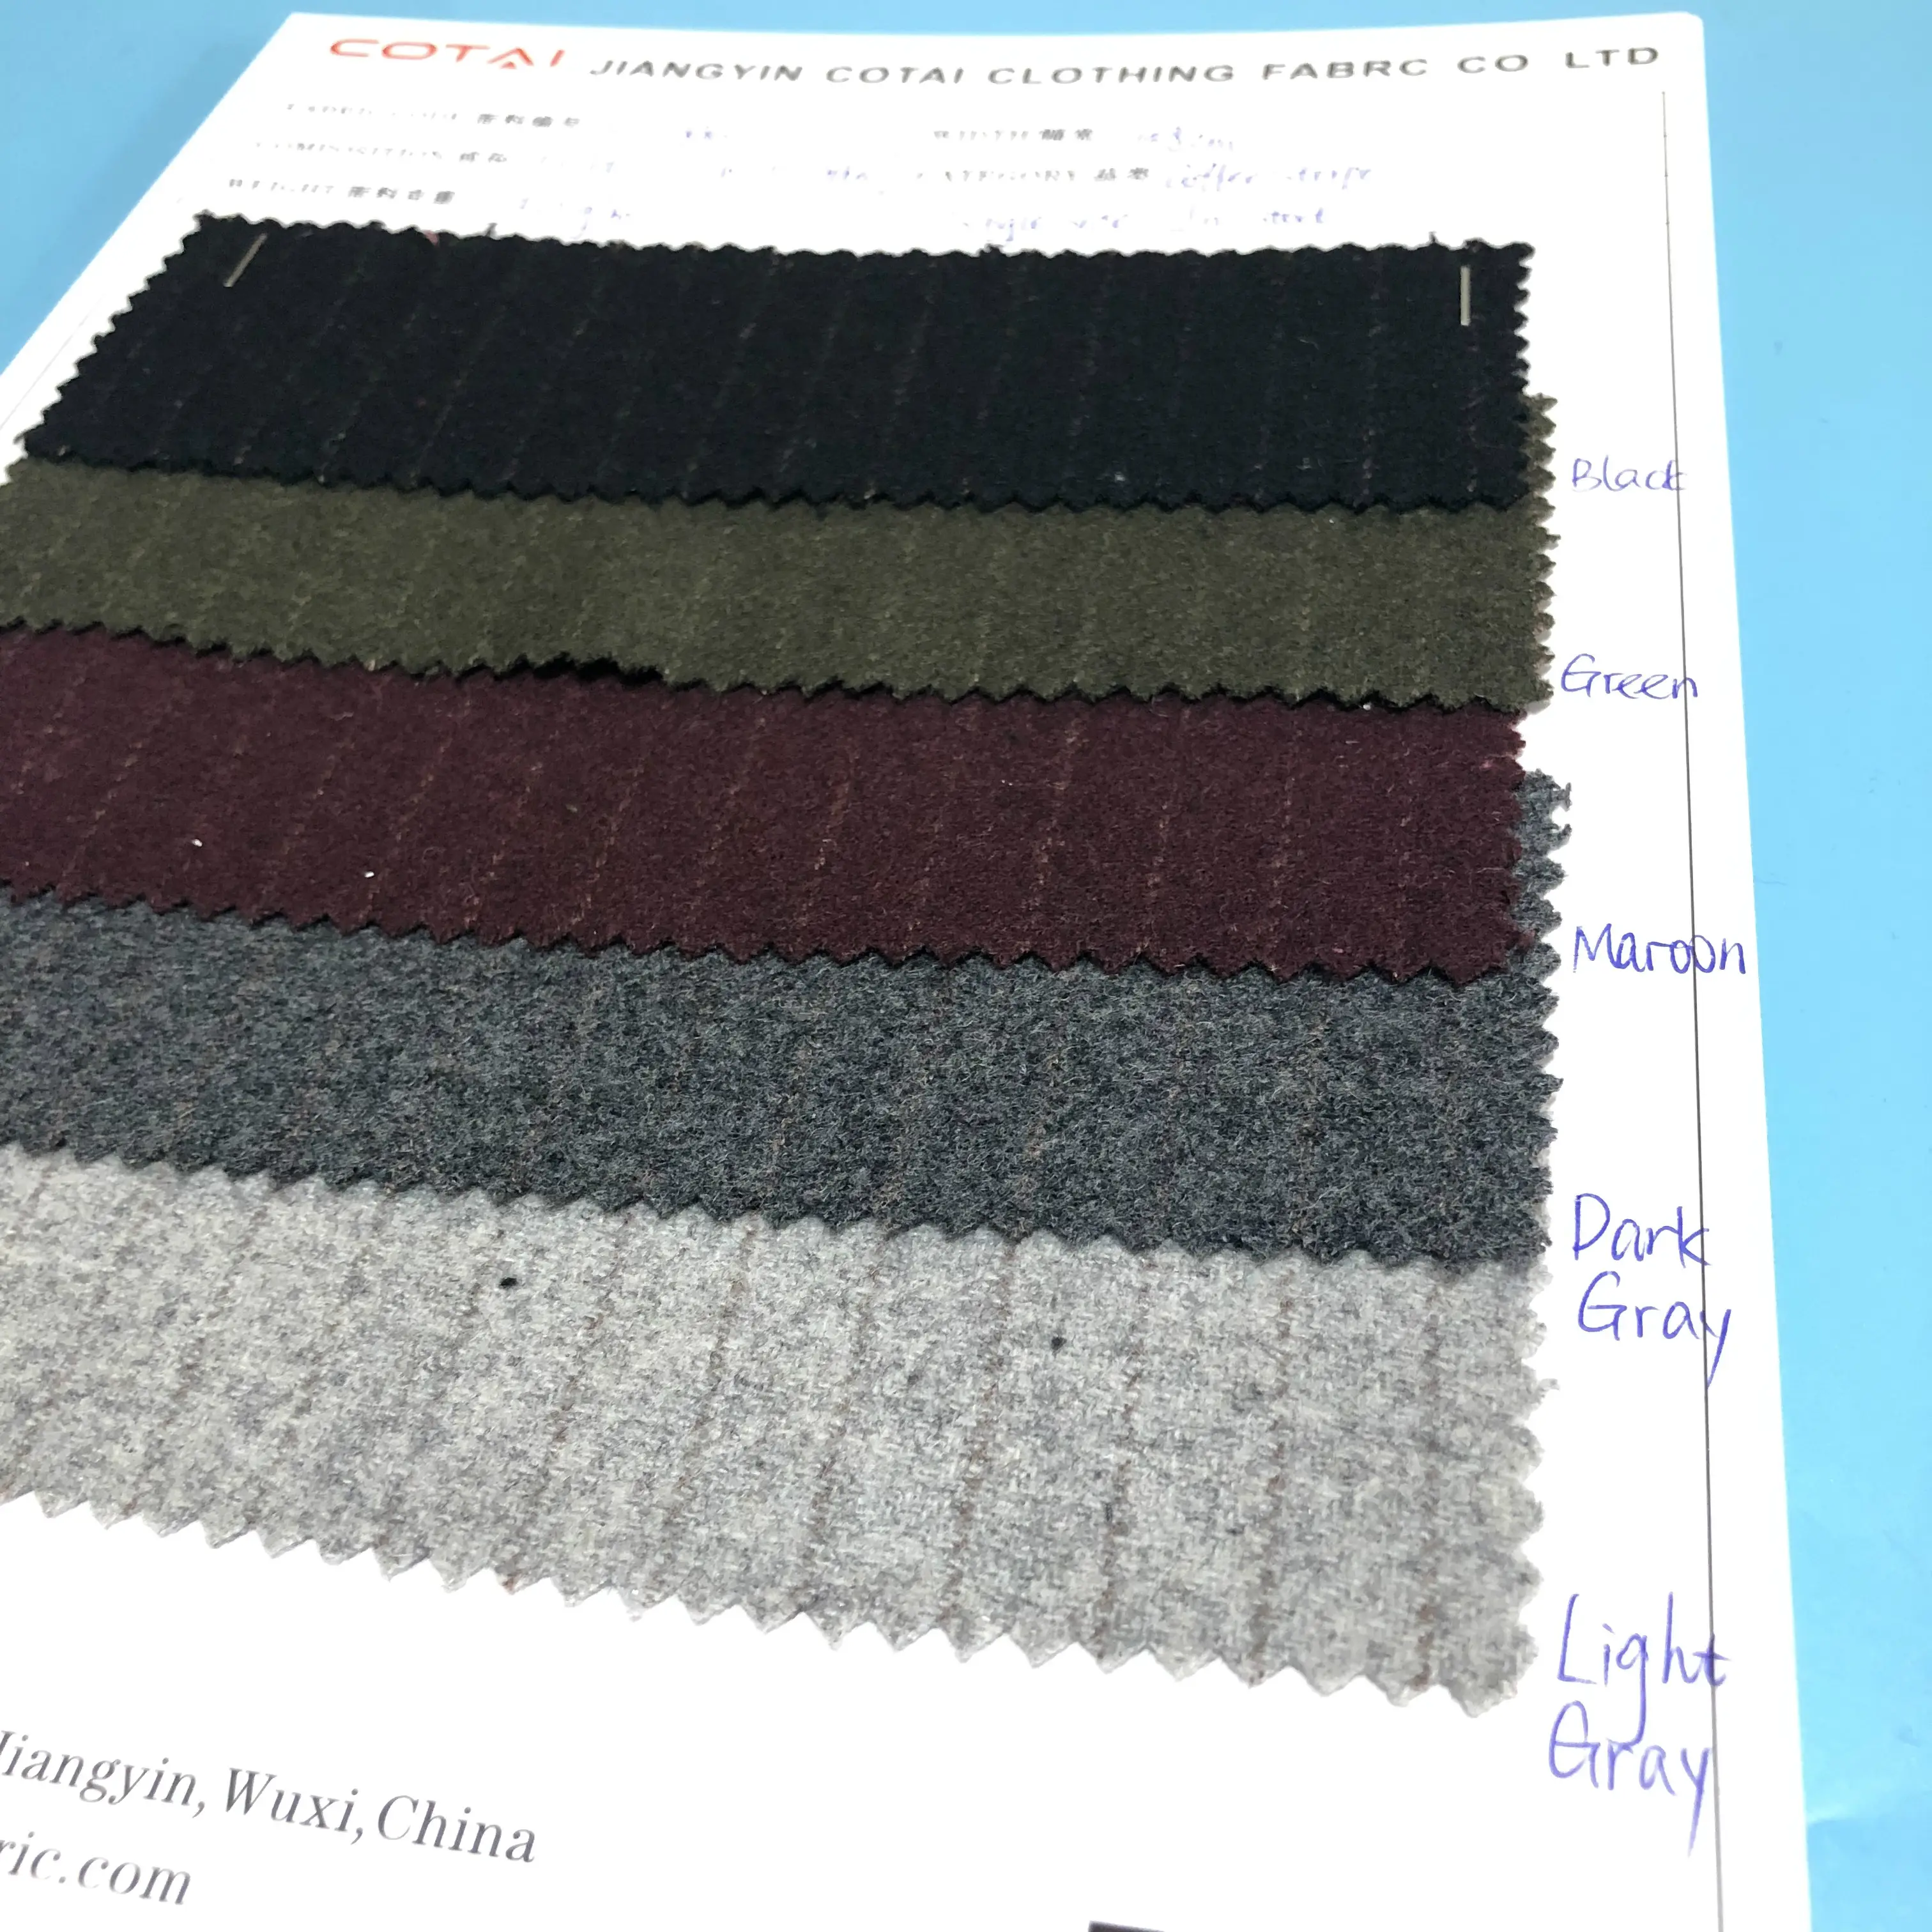 280 Gsm 50% Wool Single Sided Flannel Wool Fabric 1cm Coffee Stripe In Stock 420g/m